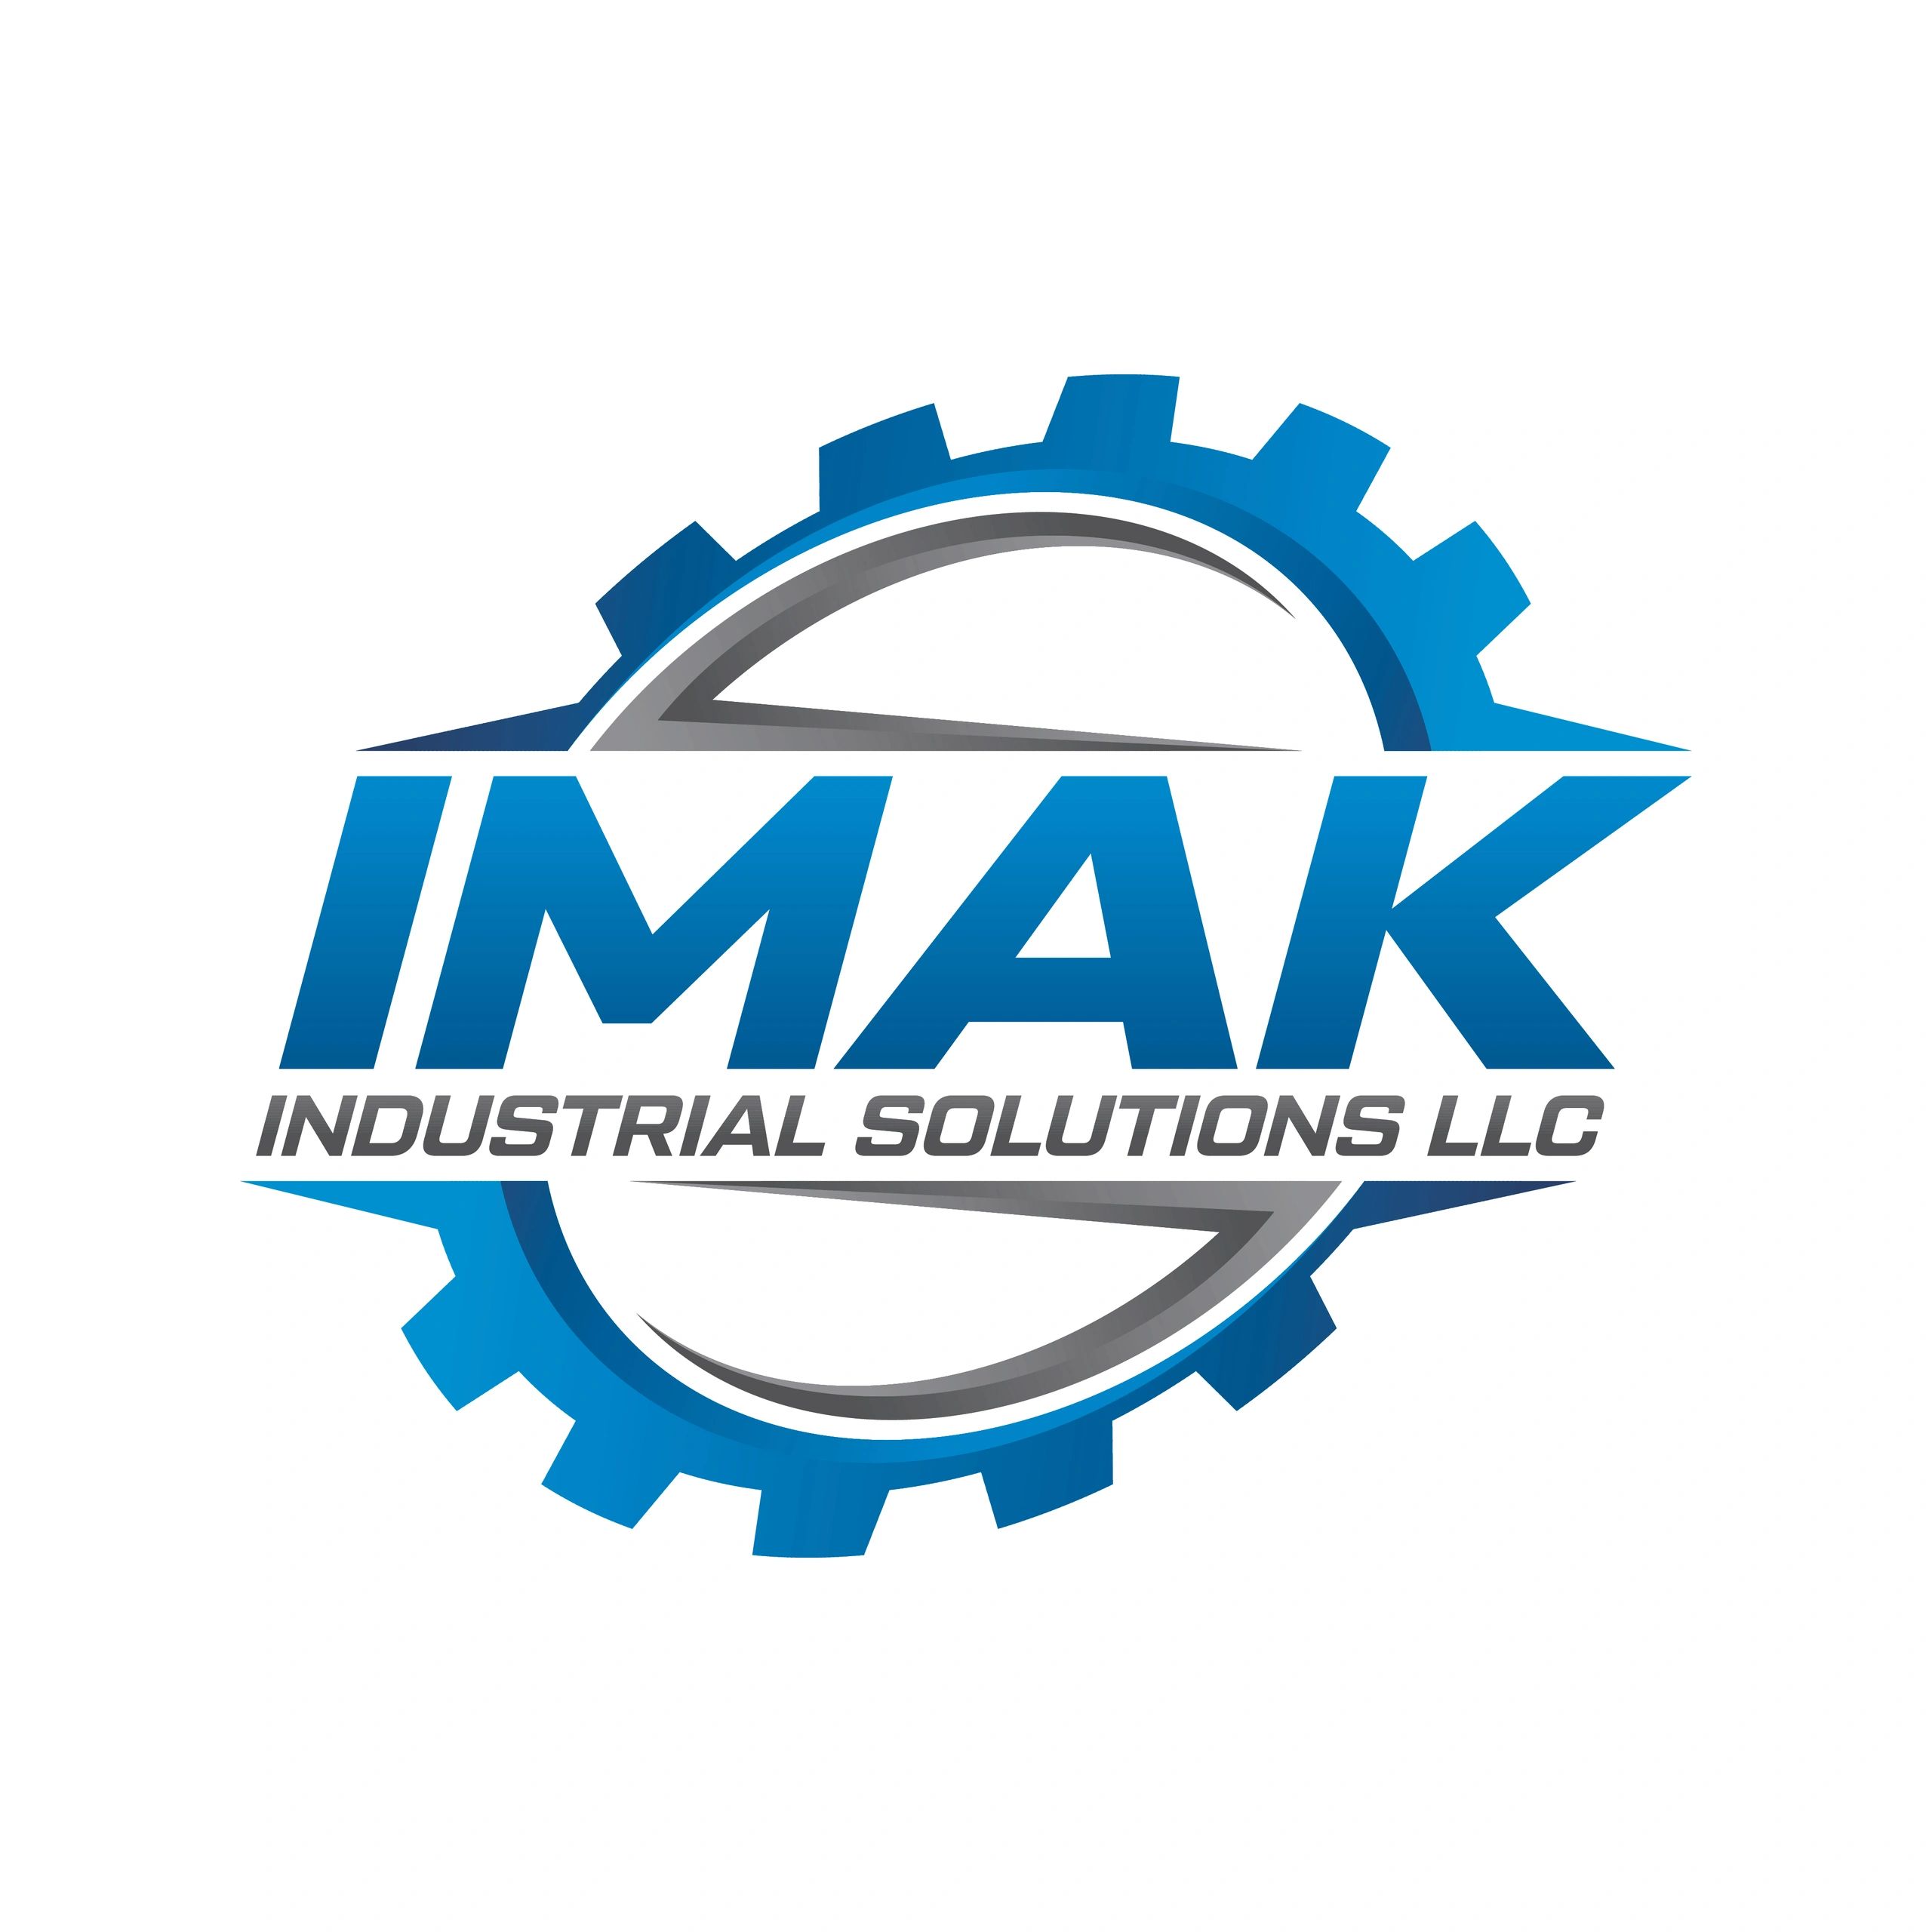 IMAK Industrial Solutions LLC